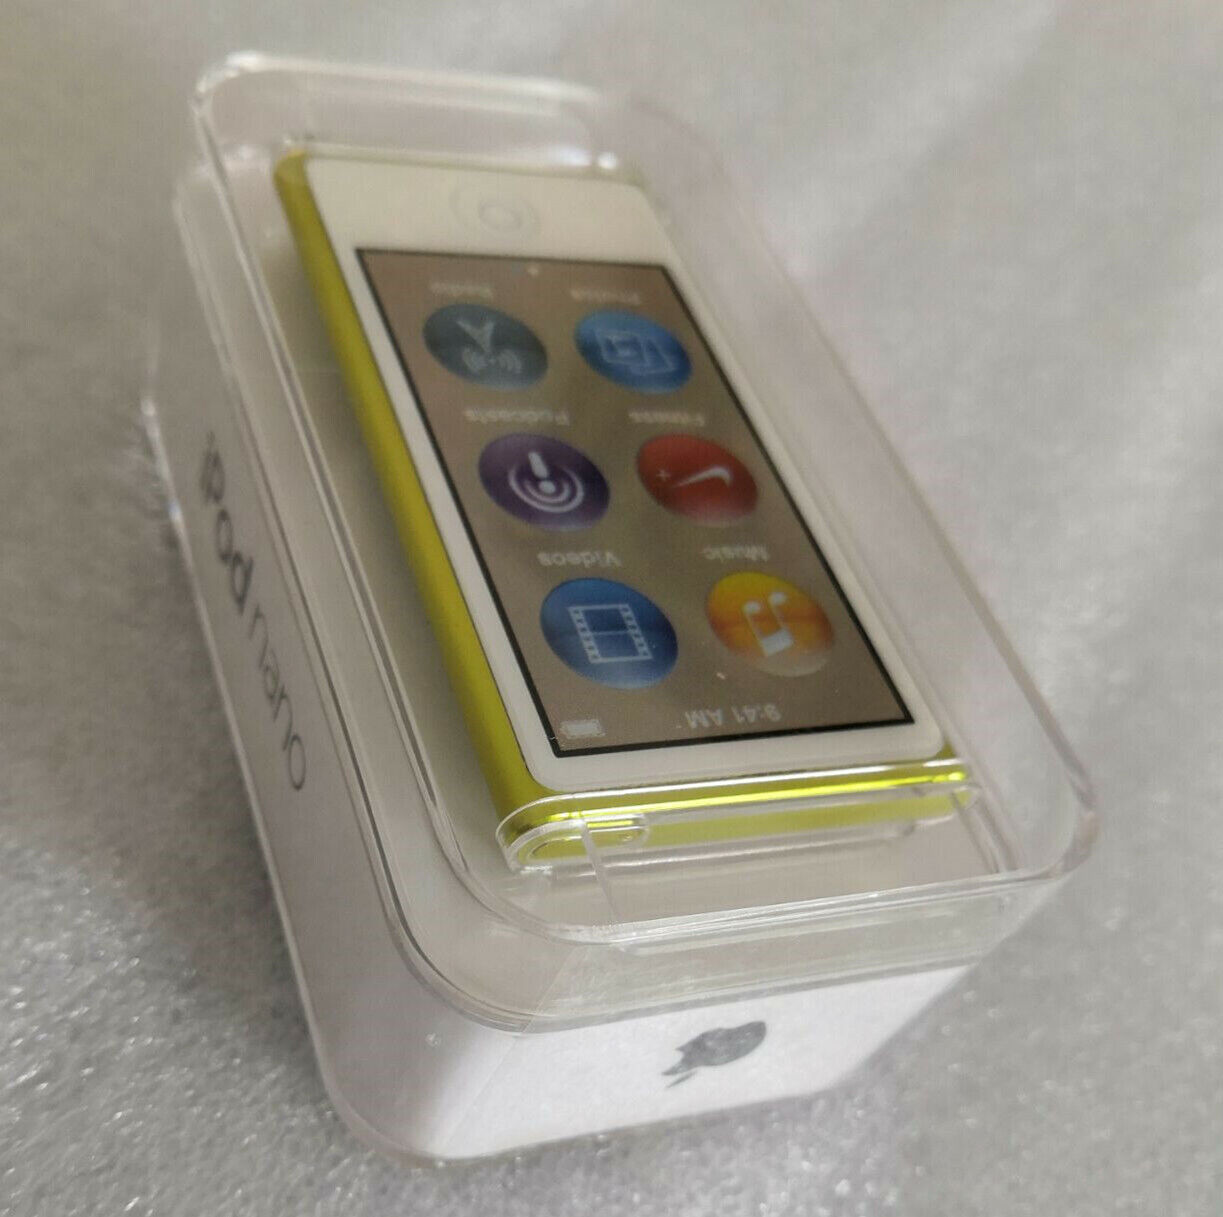 Apple iPod nano 7th Generation Yellow (16 GB)MP3 player - 90-day 